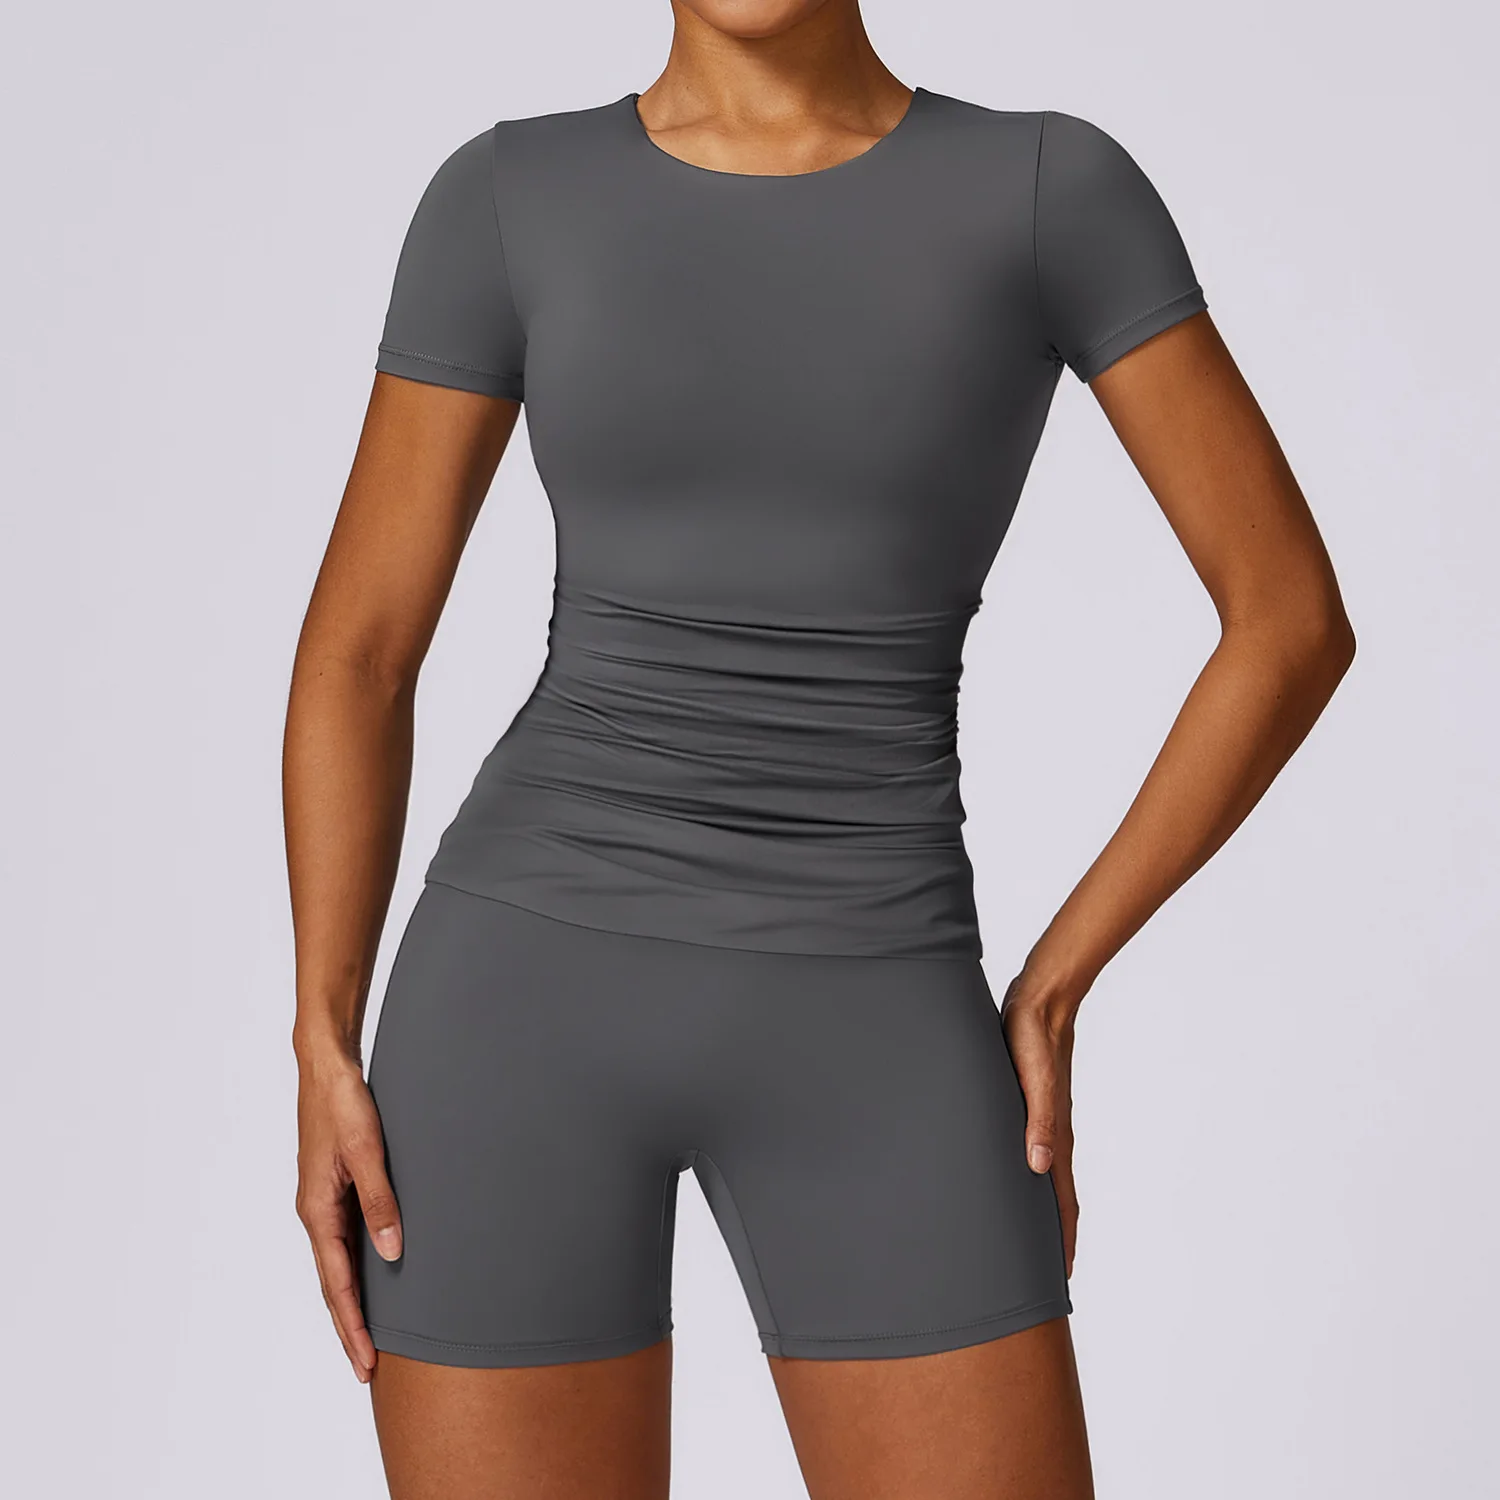 Wholesale Short Sleeve Yoga Set Active Sports Bra Leggings Fashion Seamless Gym Sportswear Women Fitness Sets & Yoga Wear